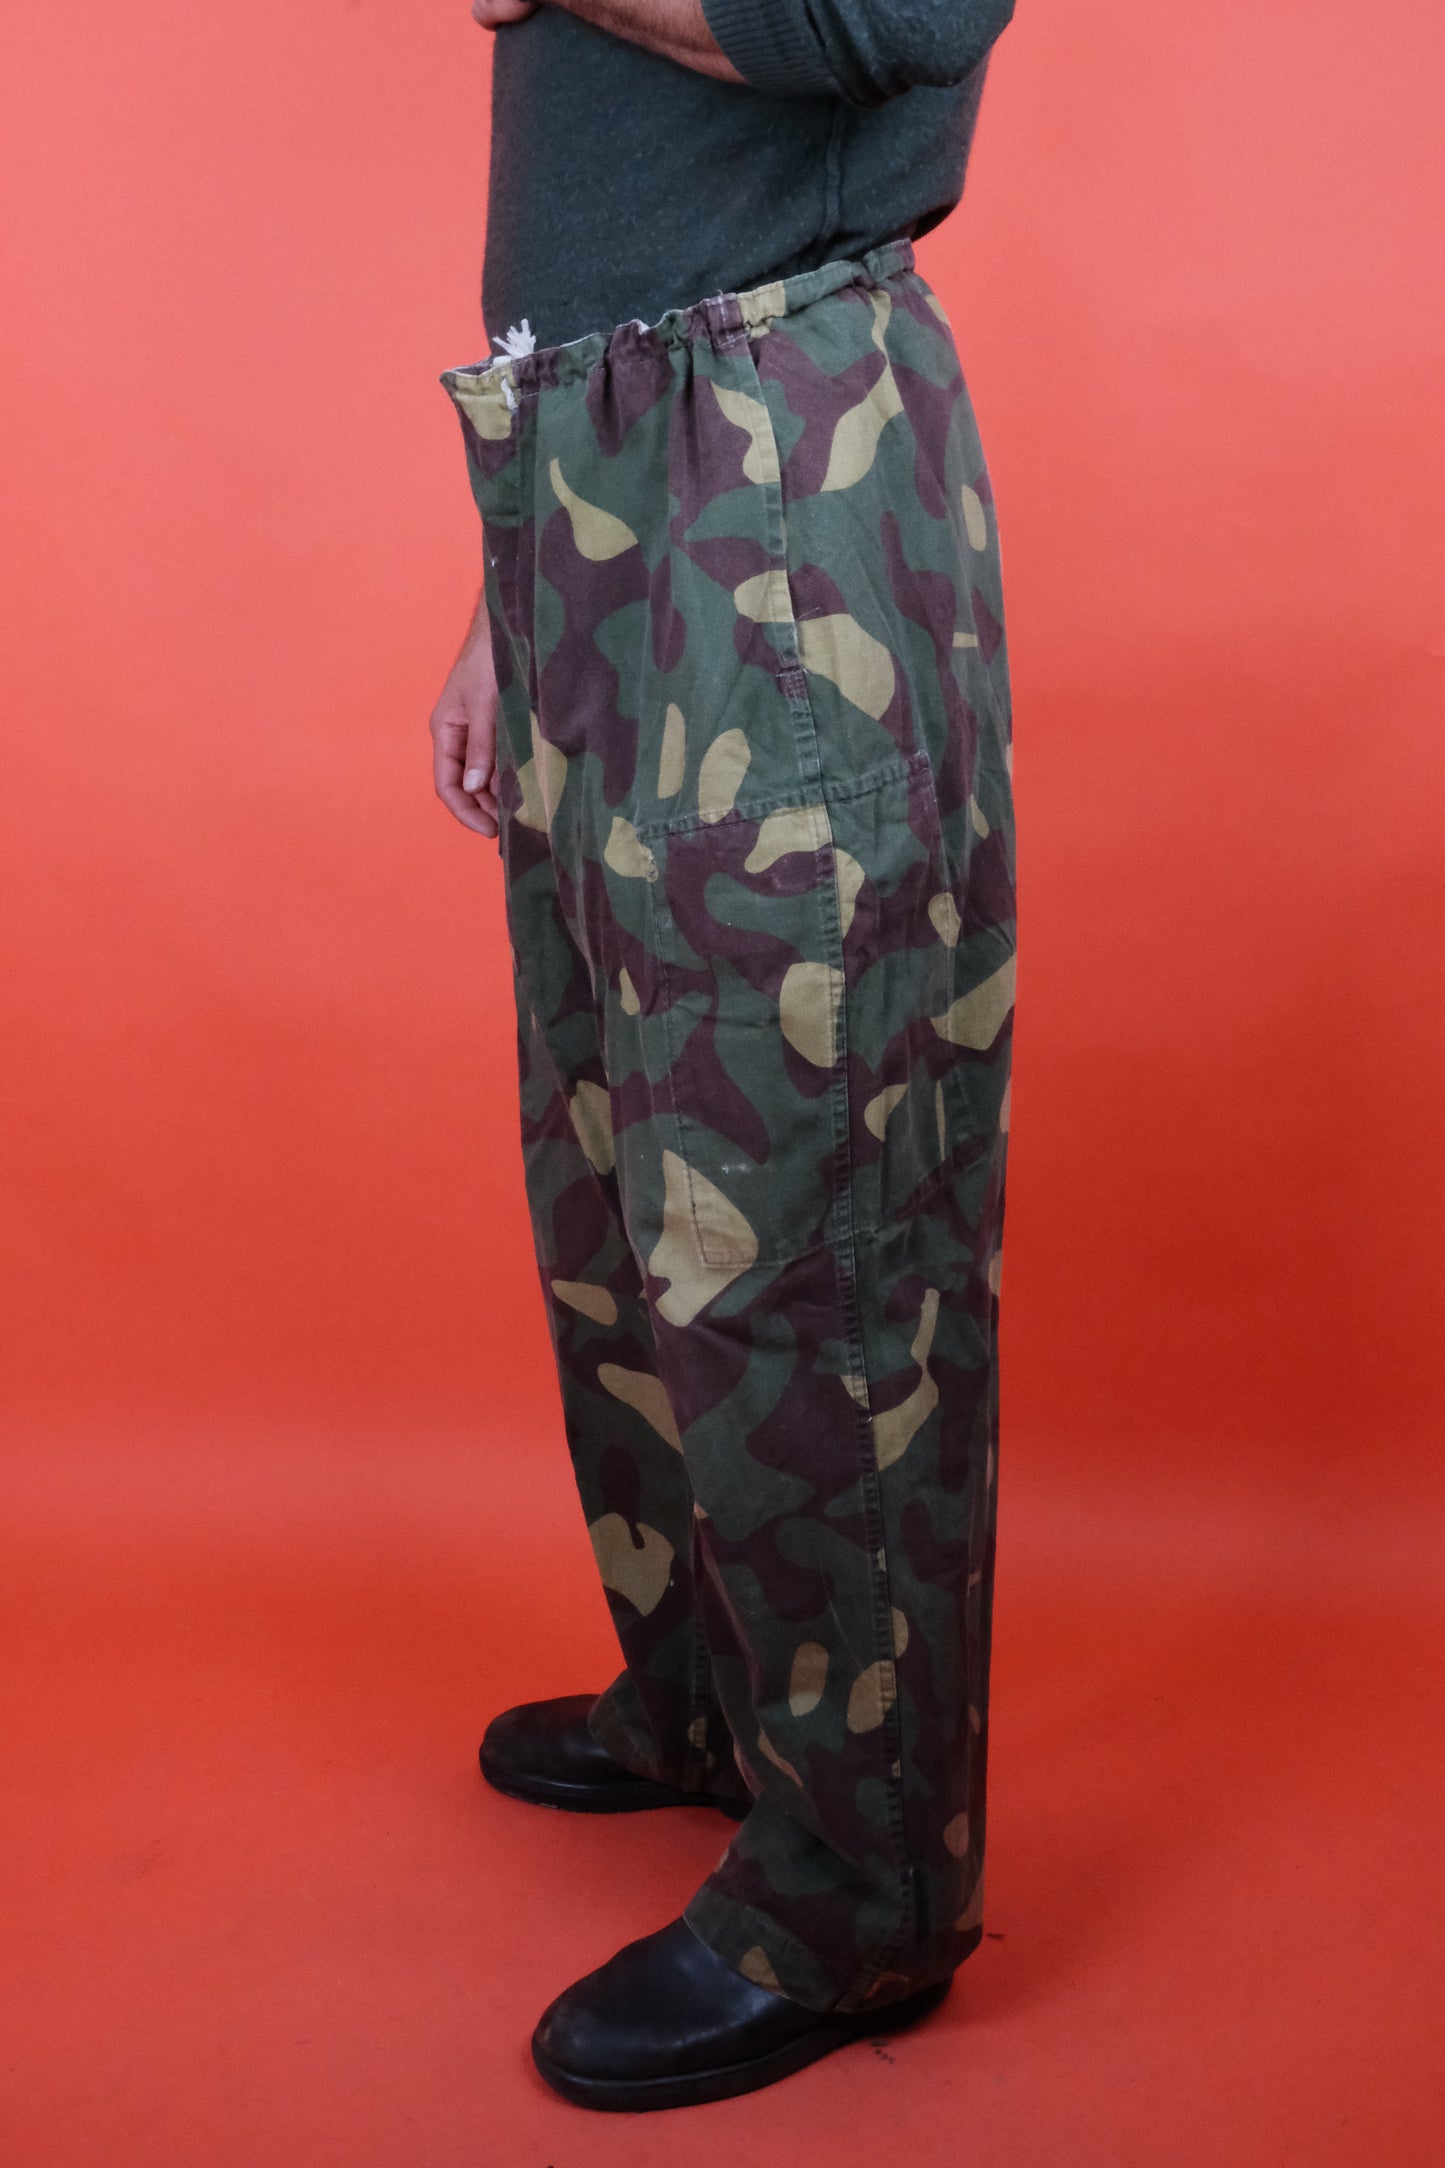 Finnish Military Jacket & Pants (Reversible) - vintage clothing clochard92.com